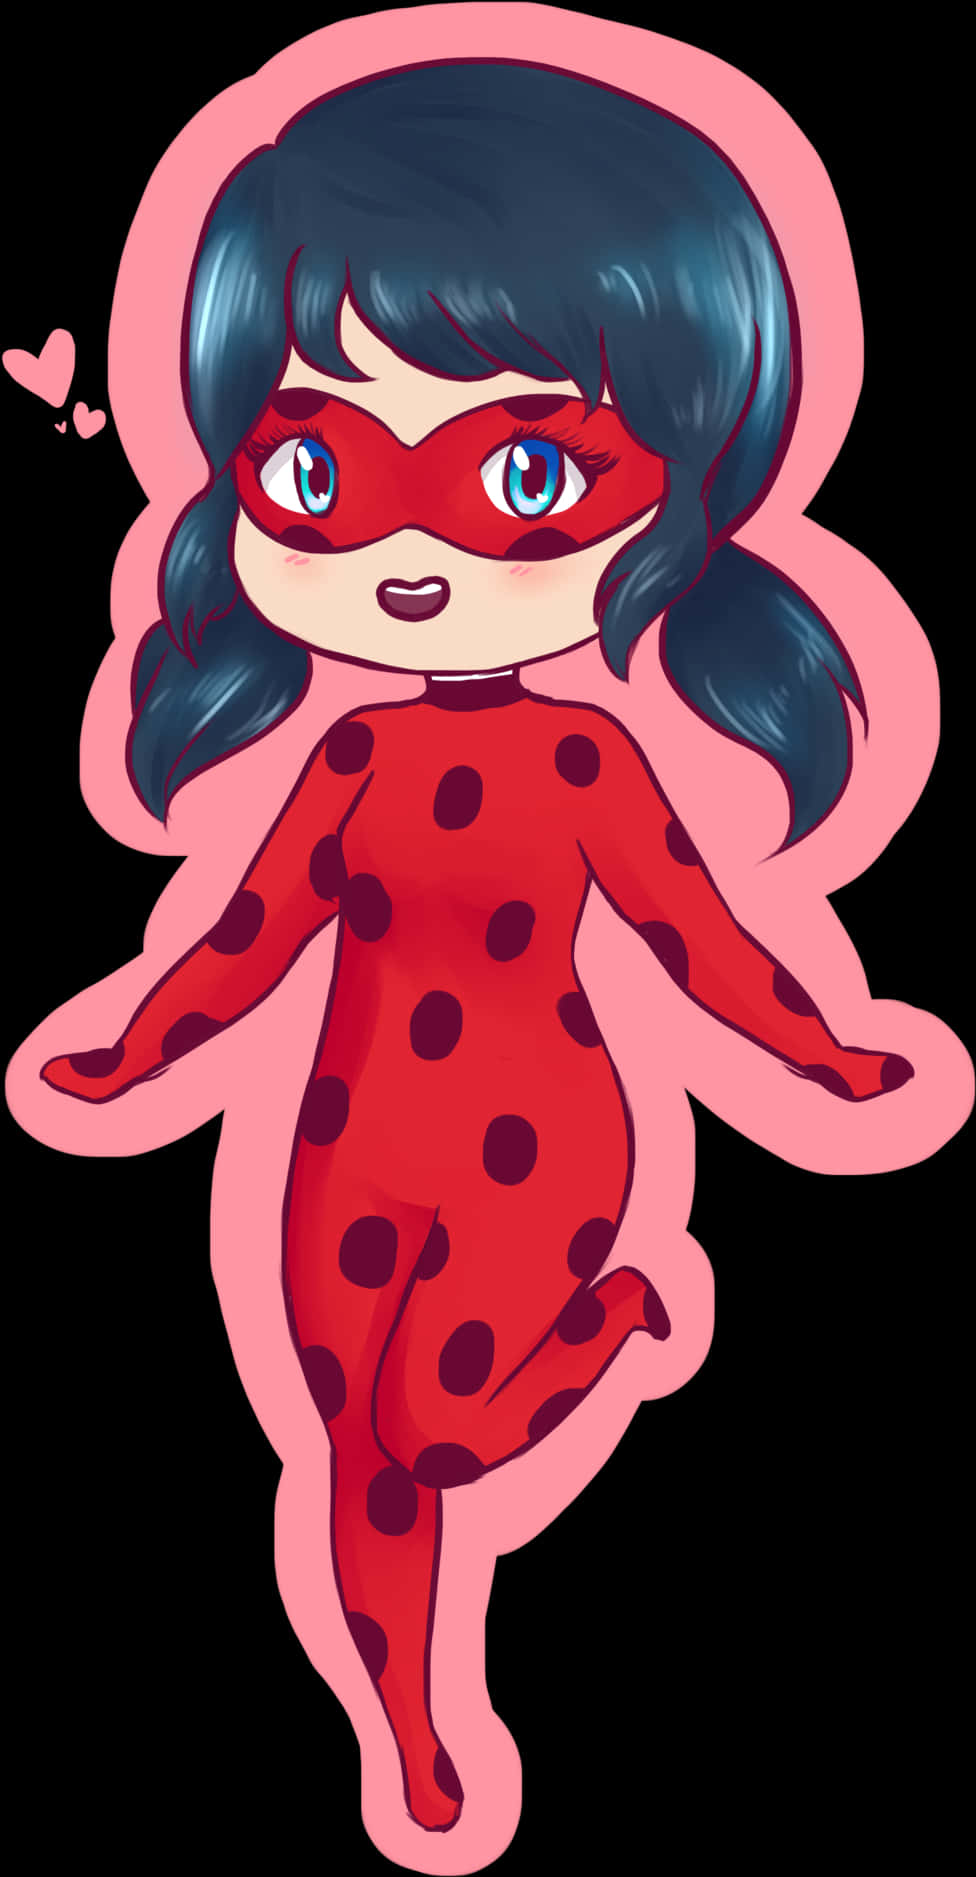 Animated Ladybug Character PNG image